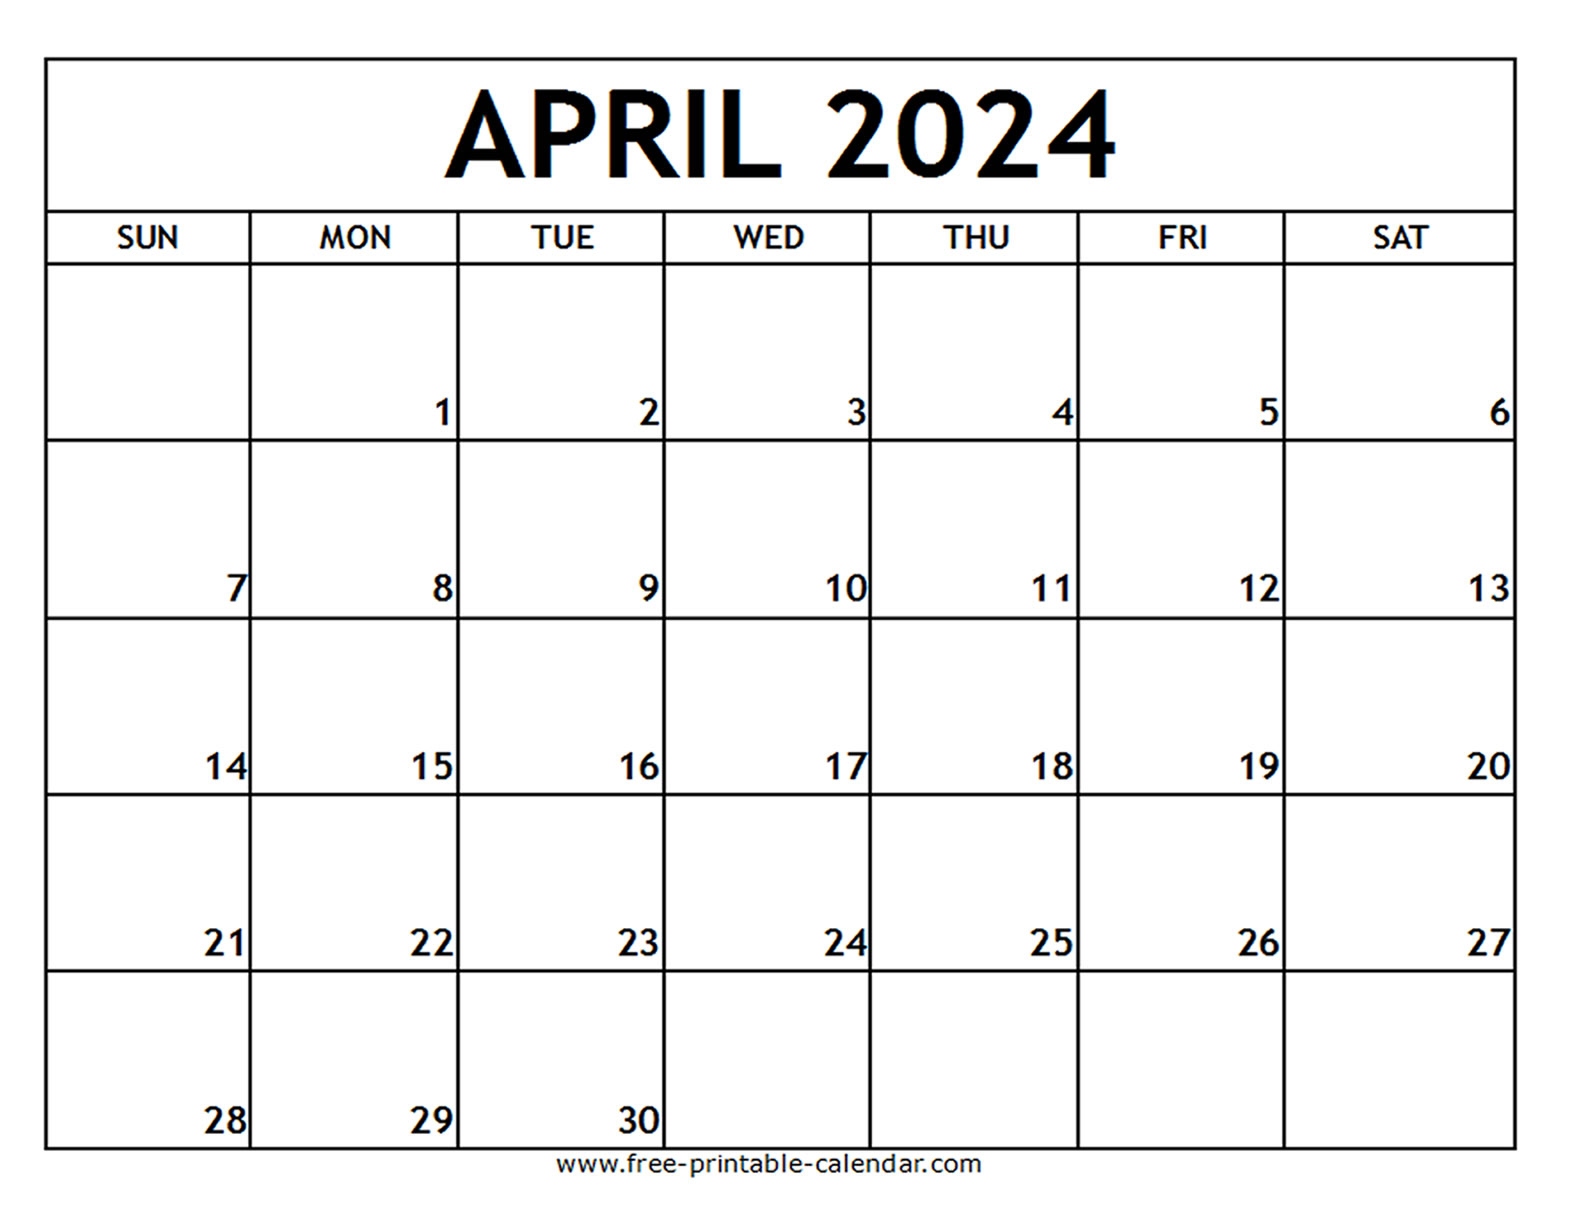 April 2024 Printable Calendar - Free-Printable-Calendar for Free Printable Calendar 2024 April